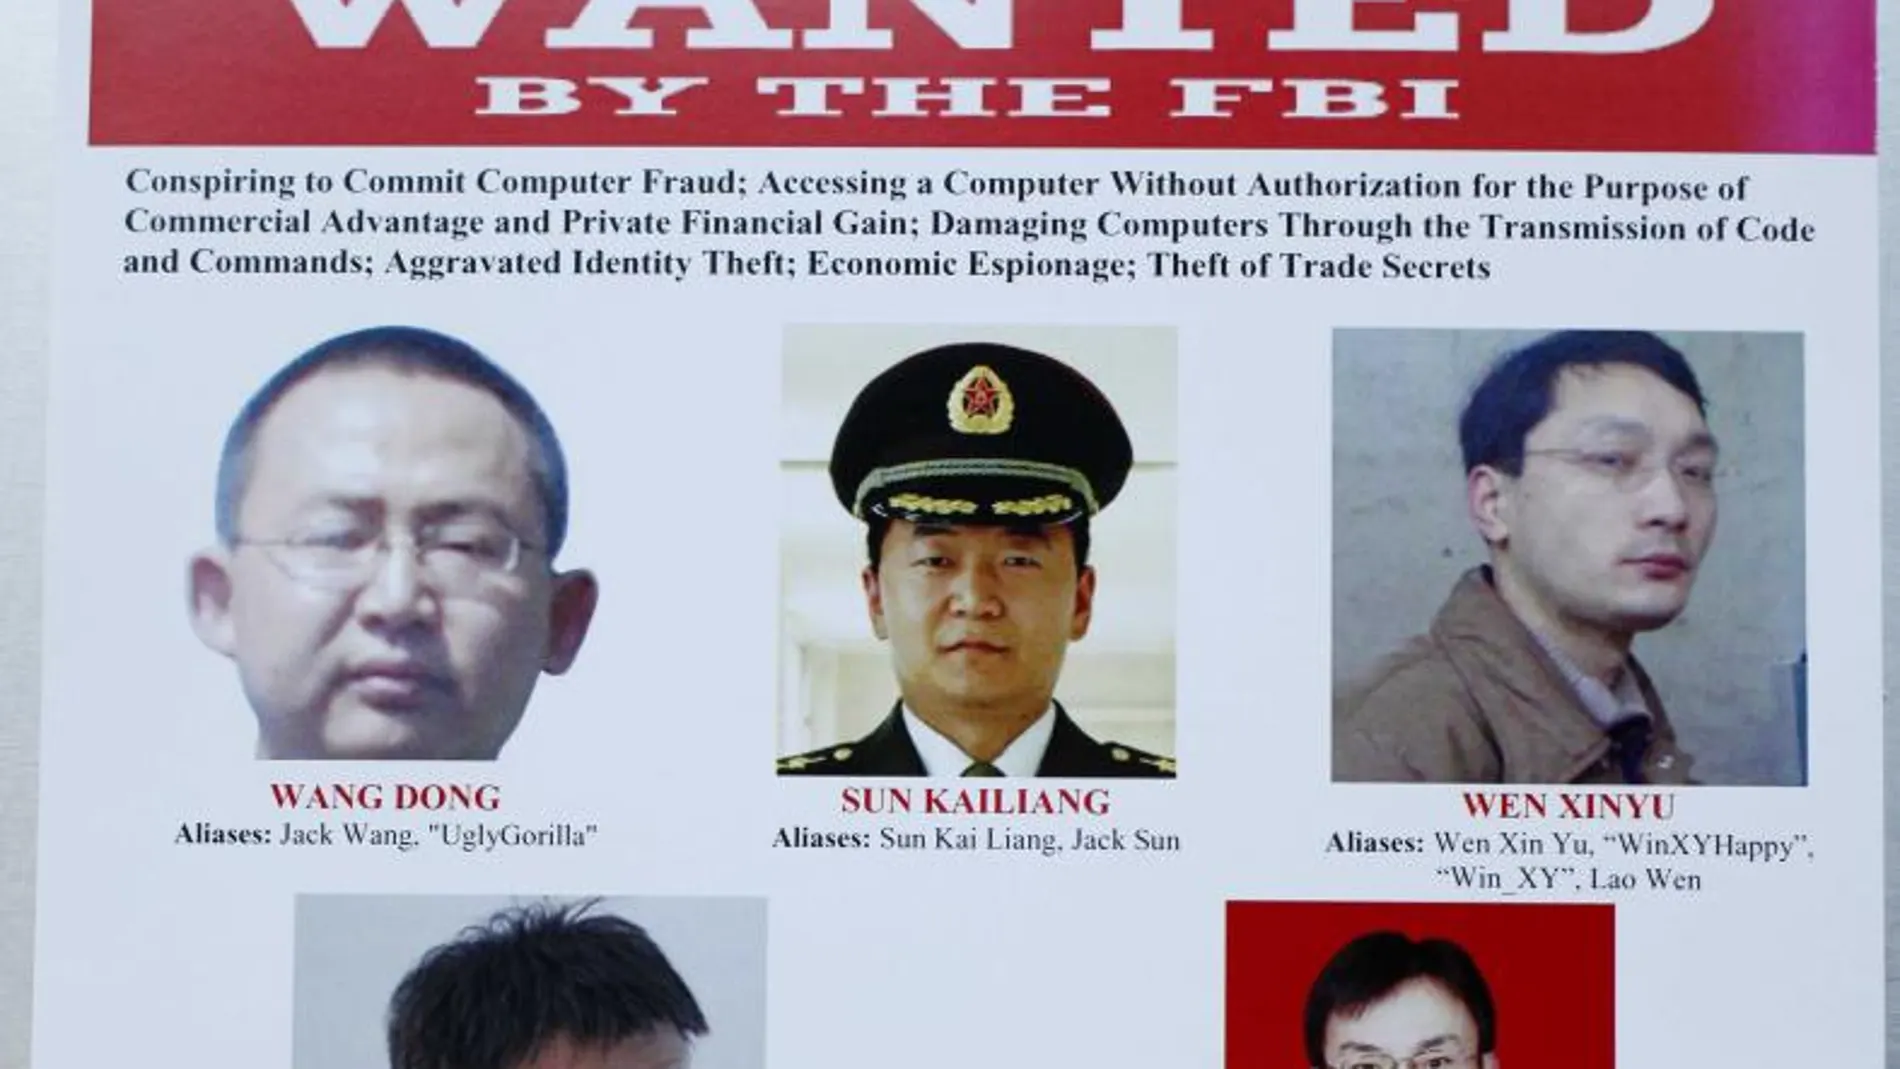 Presuntos piratas informáticos chinos buscados por las autoridades estadounidenses